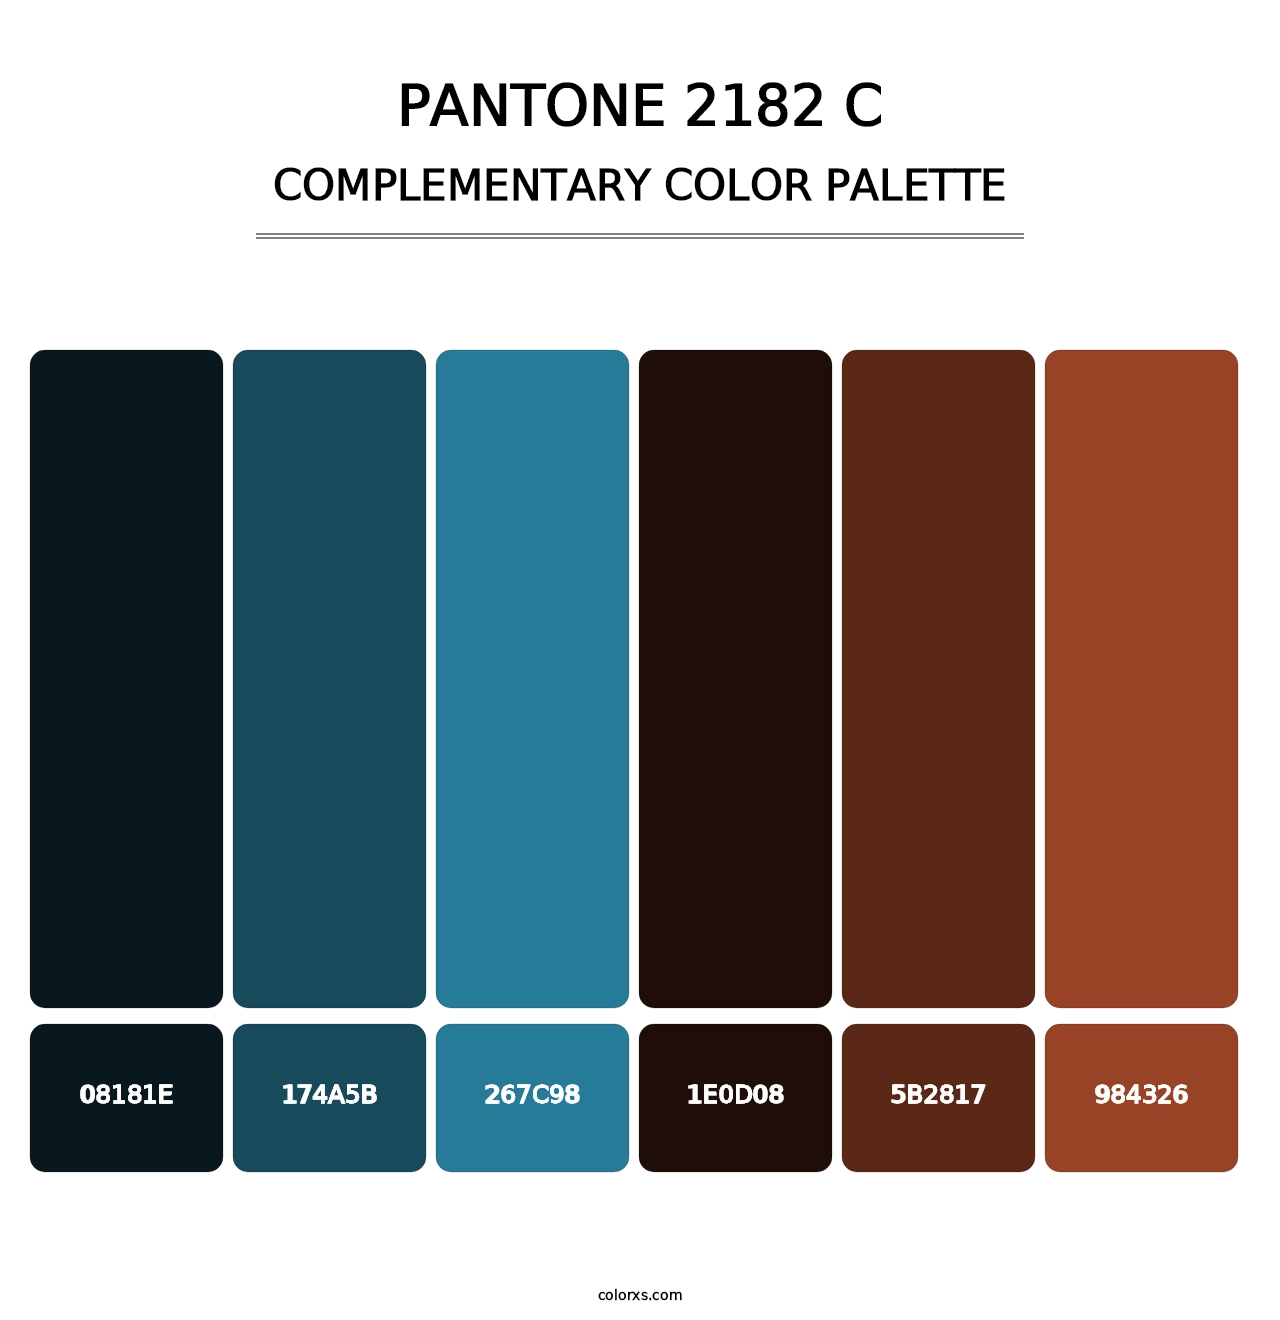 PANTONE 2182 C - Complementary Color Palette